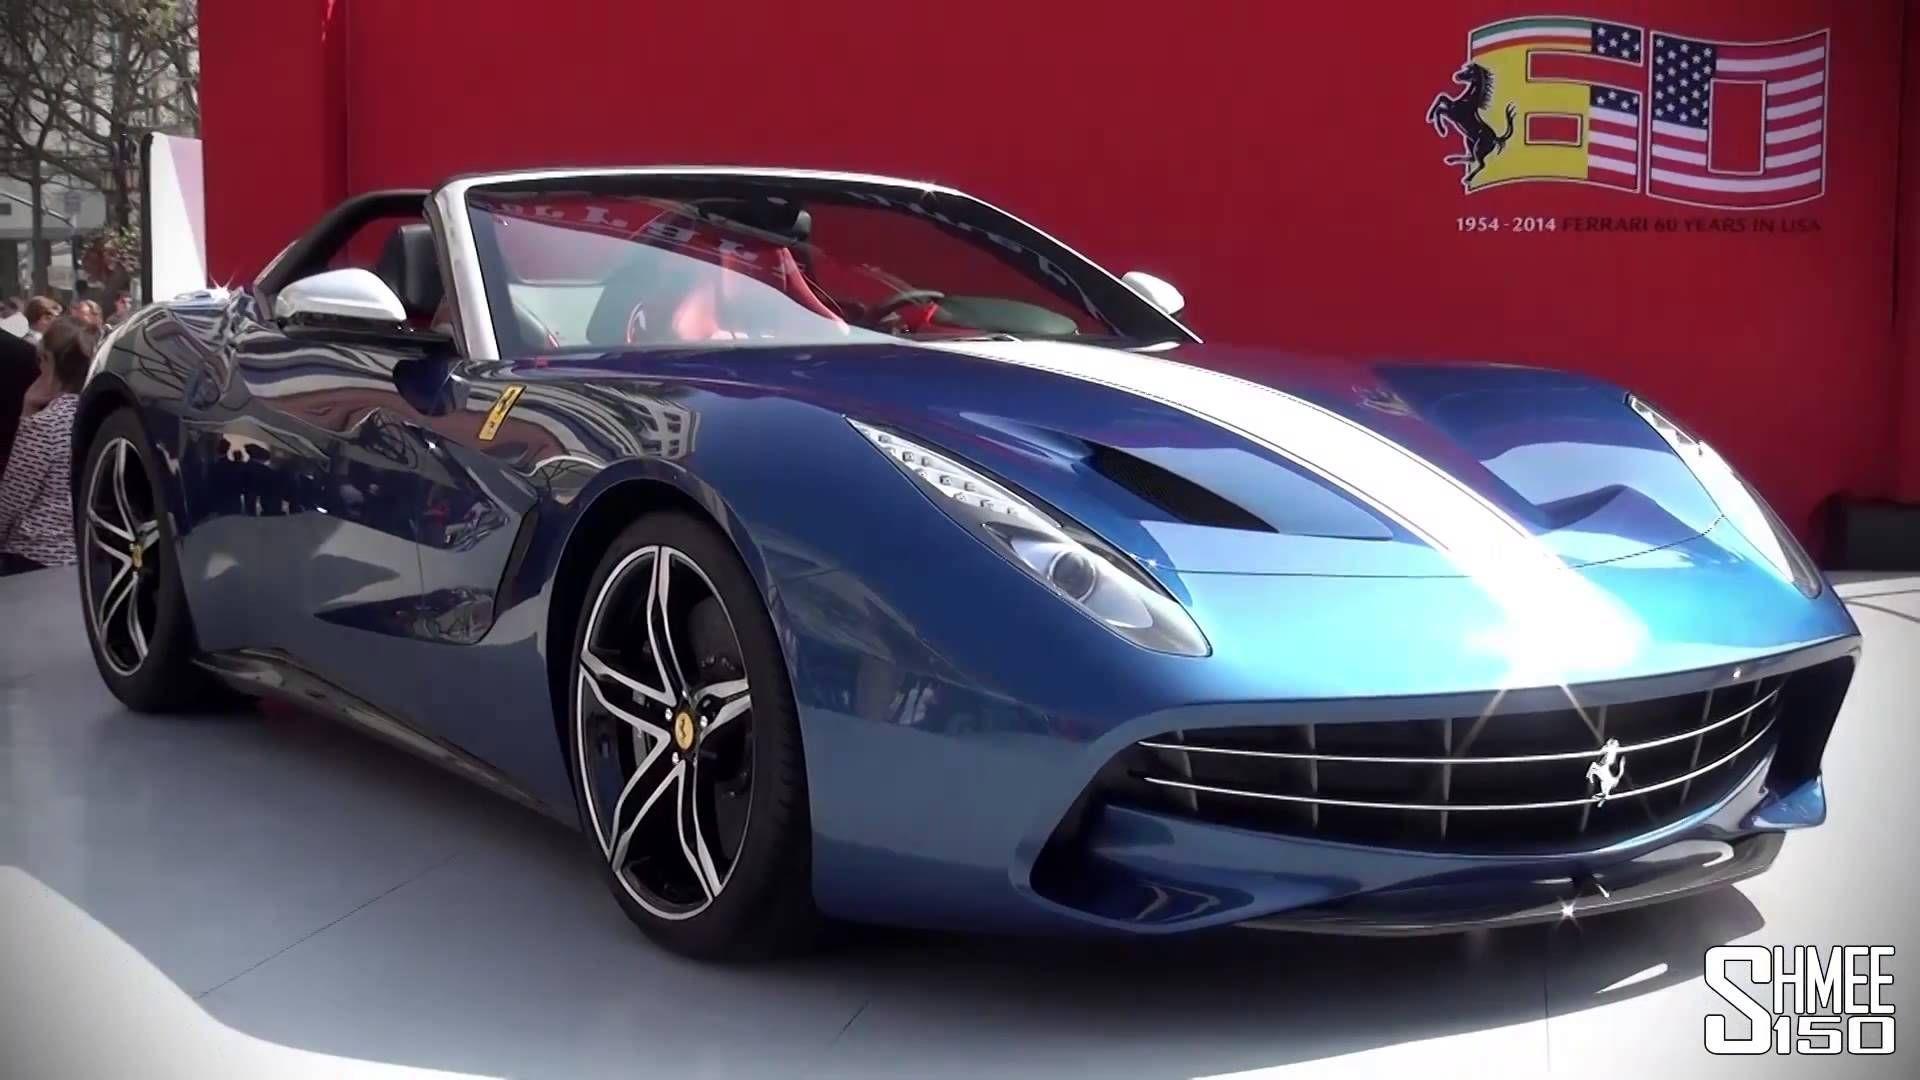 Ferrari F60 America. Automobiles. Ferrari and Cars